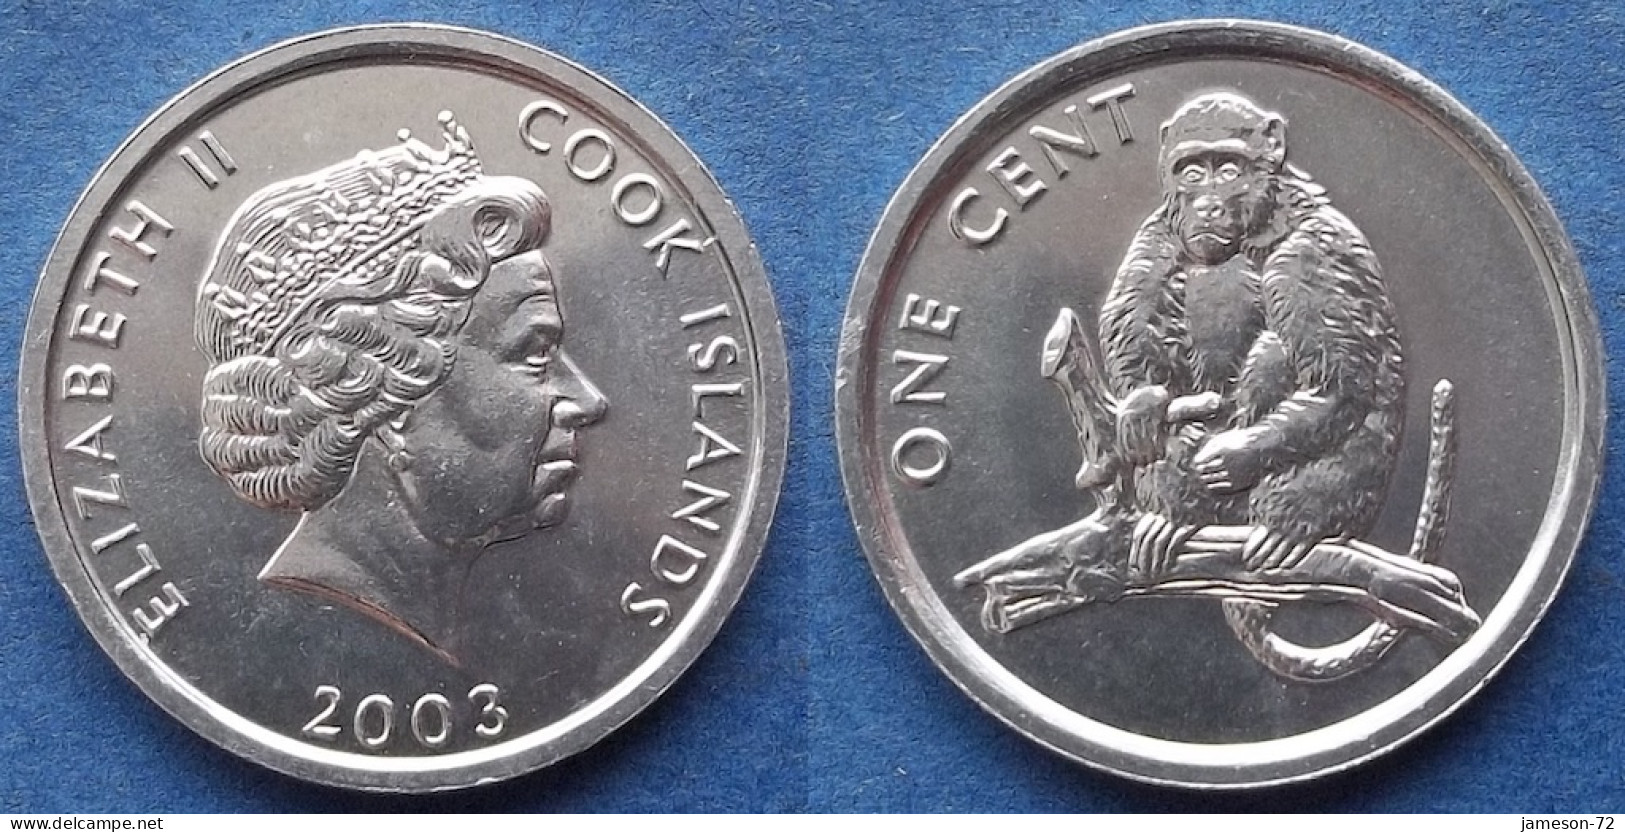 COOK ISLANDS - 1 Cent 2003 "Monkey On Branch" KM# 423 Dependency Of New Zealand Elizabeth II - Edelweiss Coins - Cook Islands